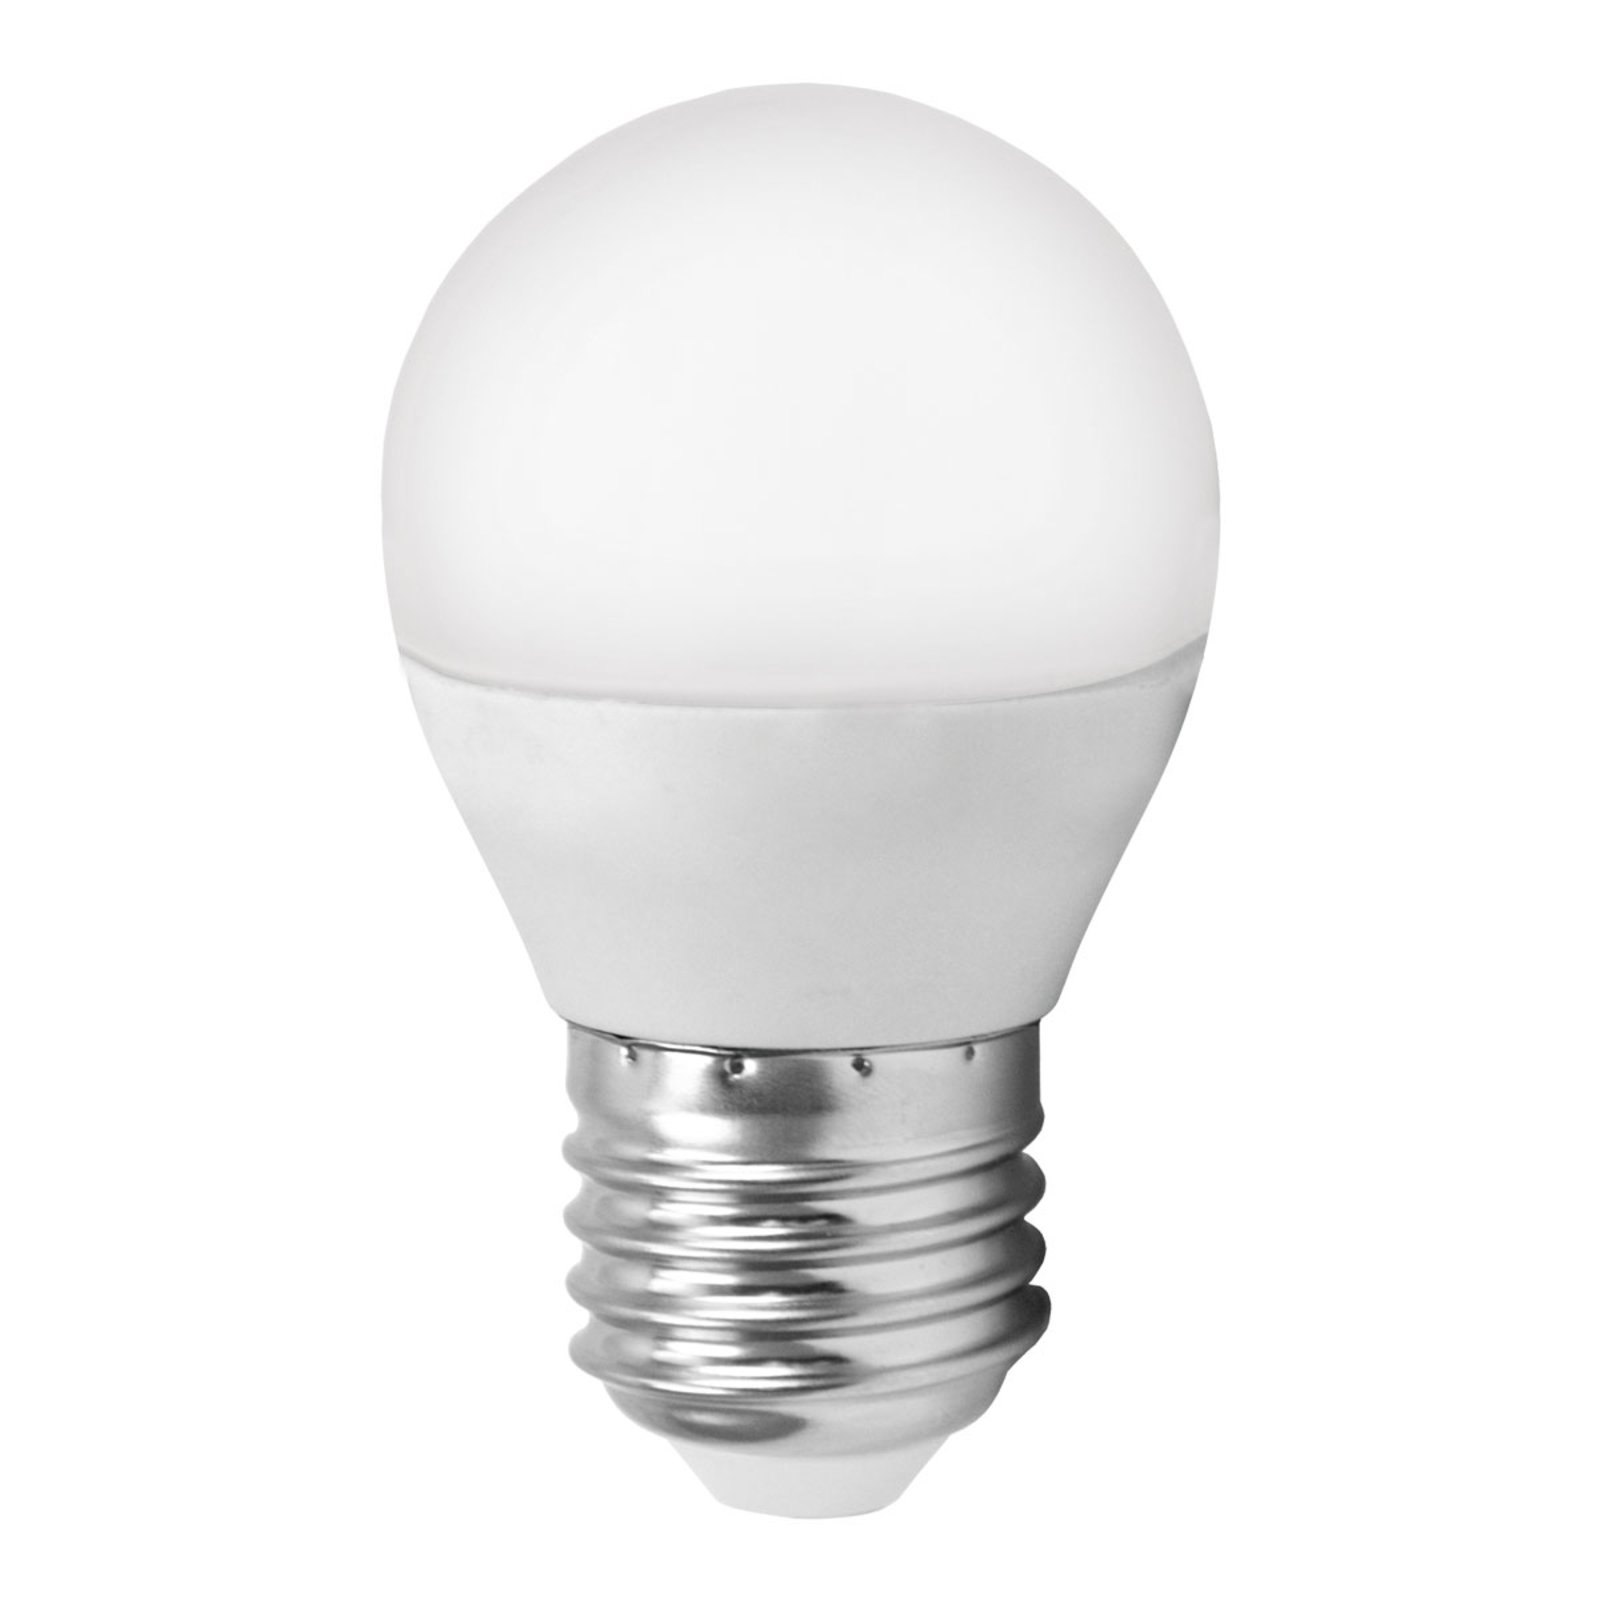 Żarówka LED E27 G45 5W MiniGlobe, uniwersalna biel